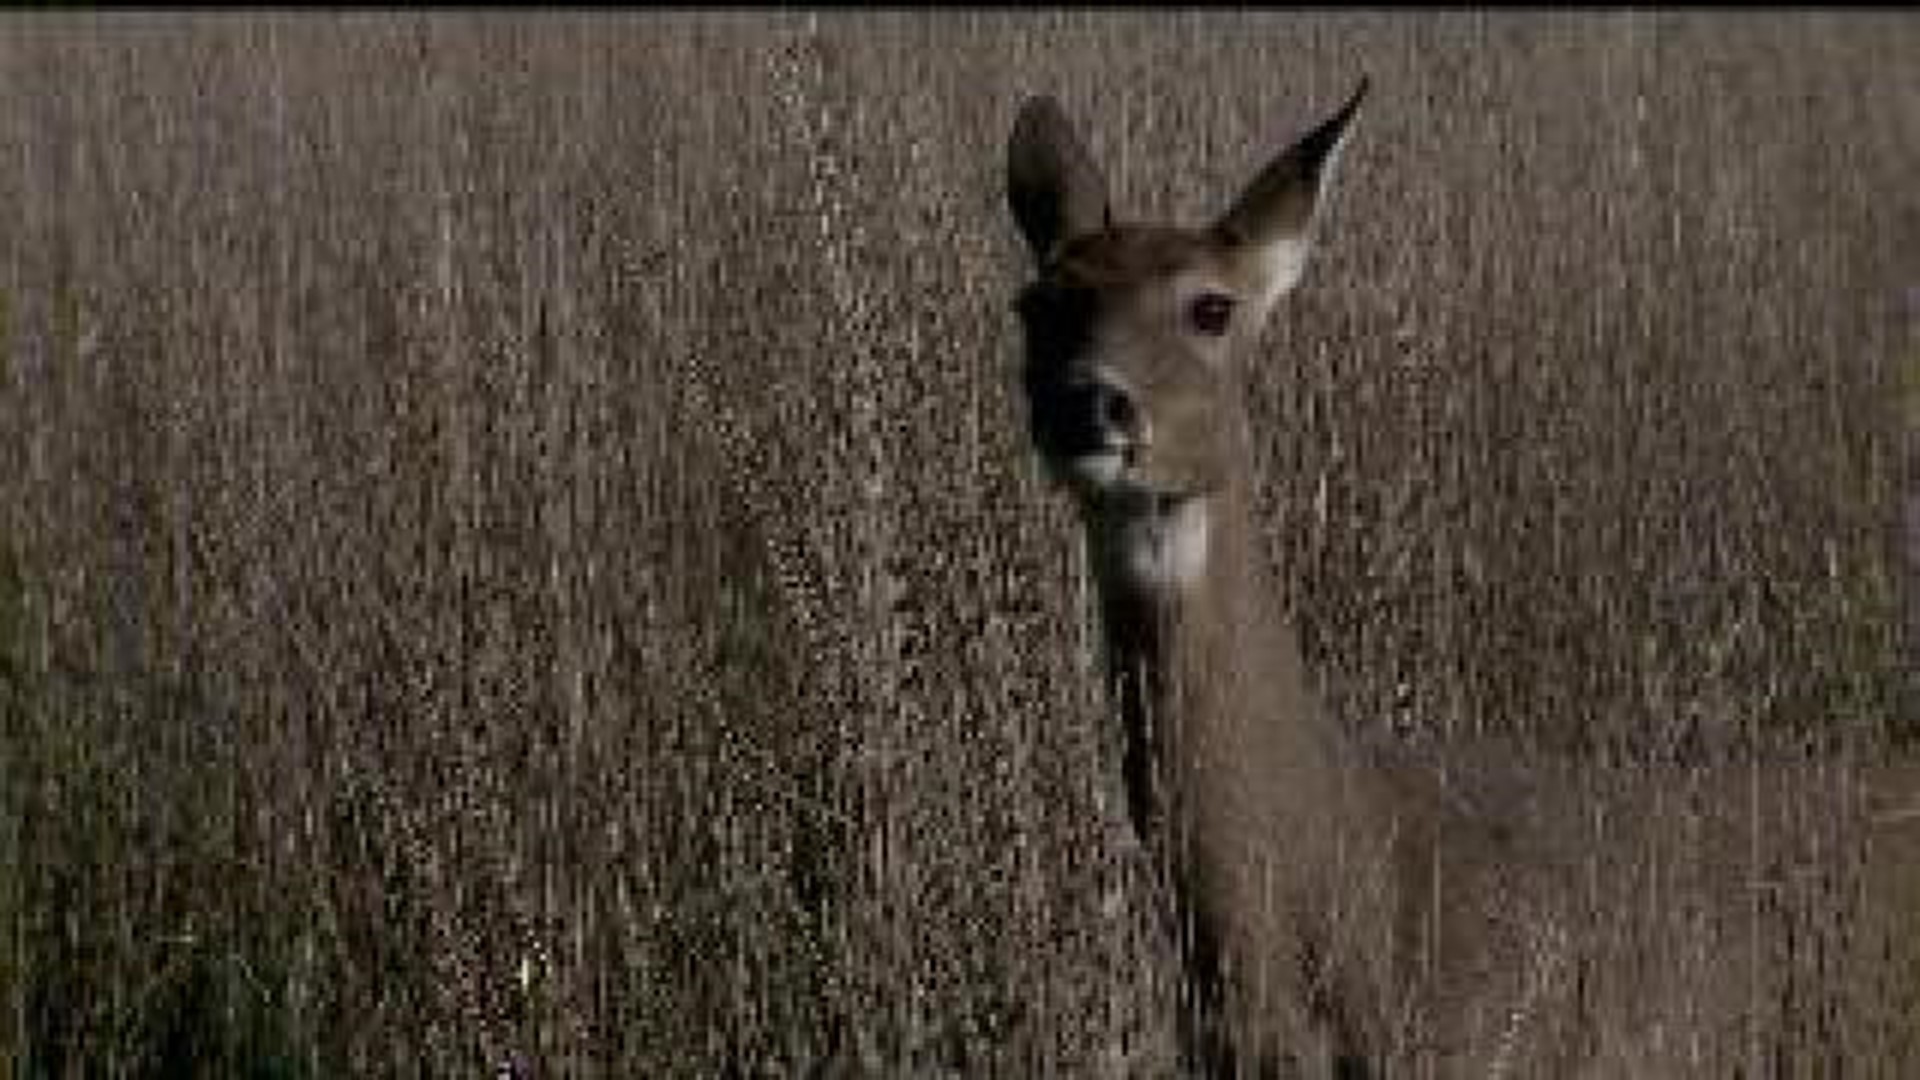 Illinois Senator wants to move shotgun deer season